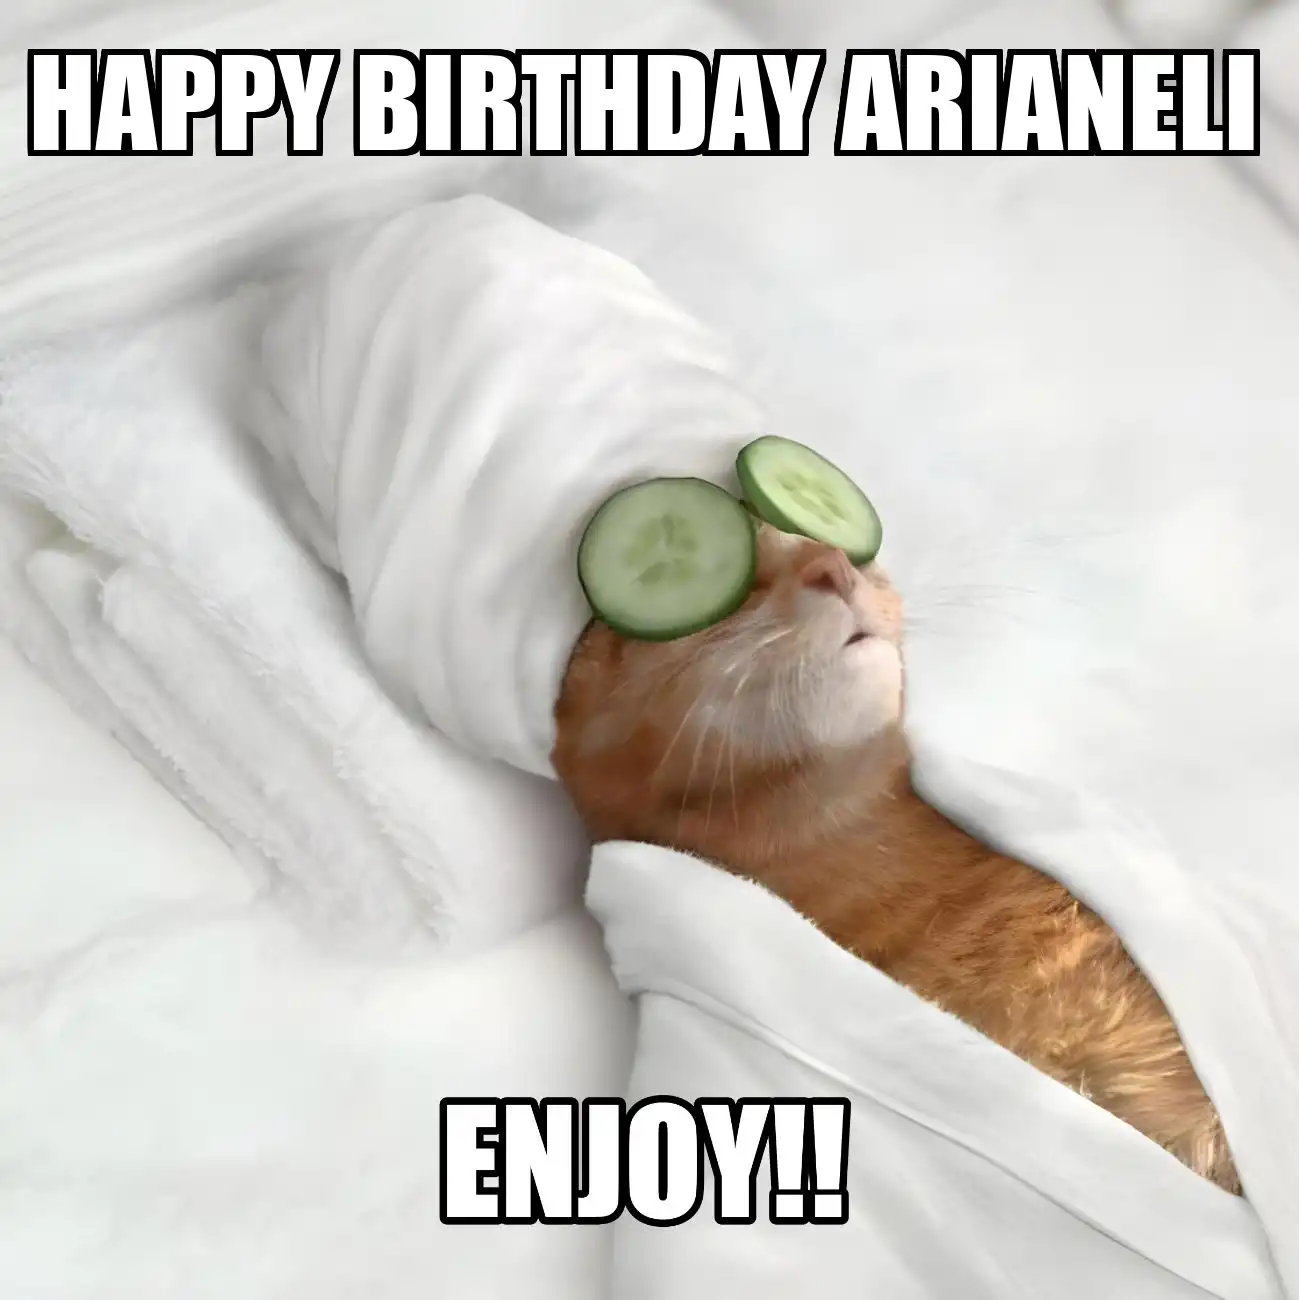 Happy Birthday Arianeli Enjoy Cat Meme